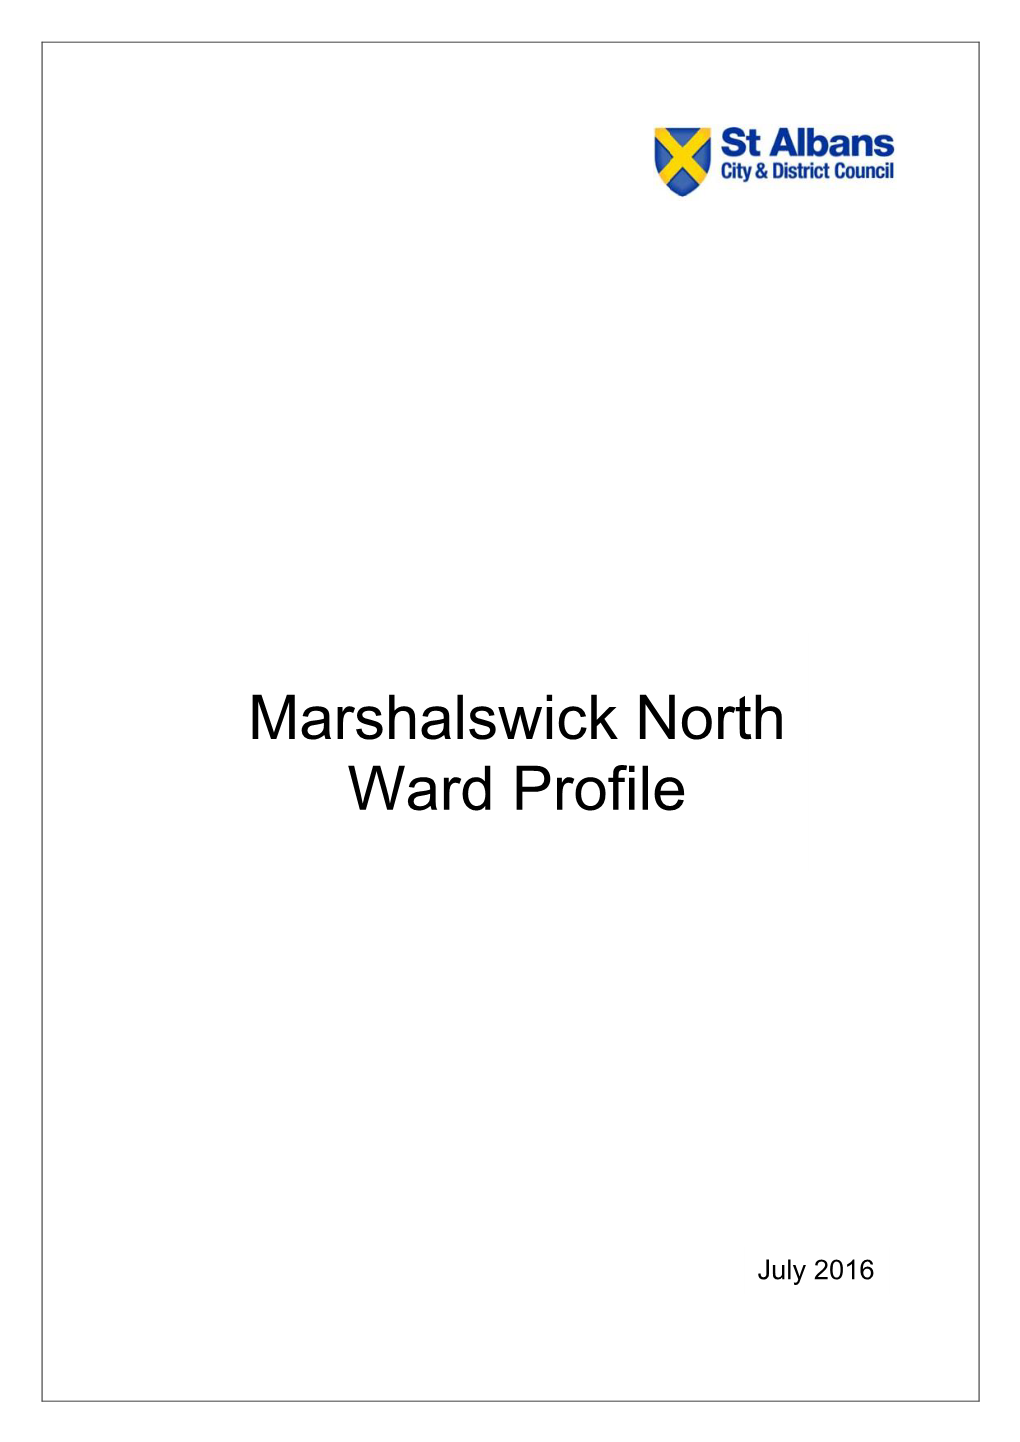 Marshalswick North Ward Profile